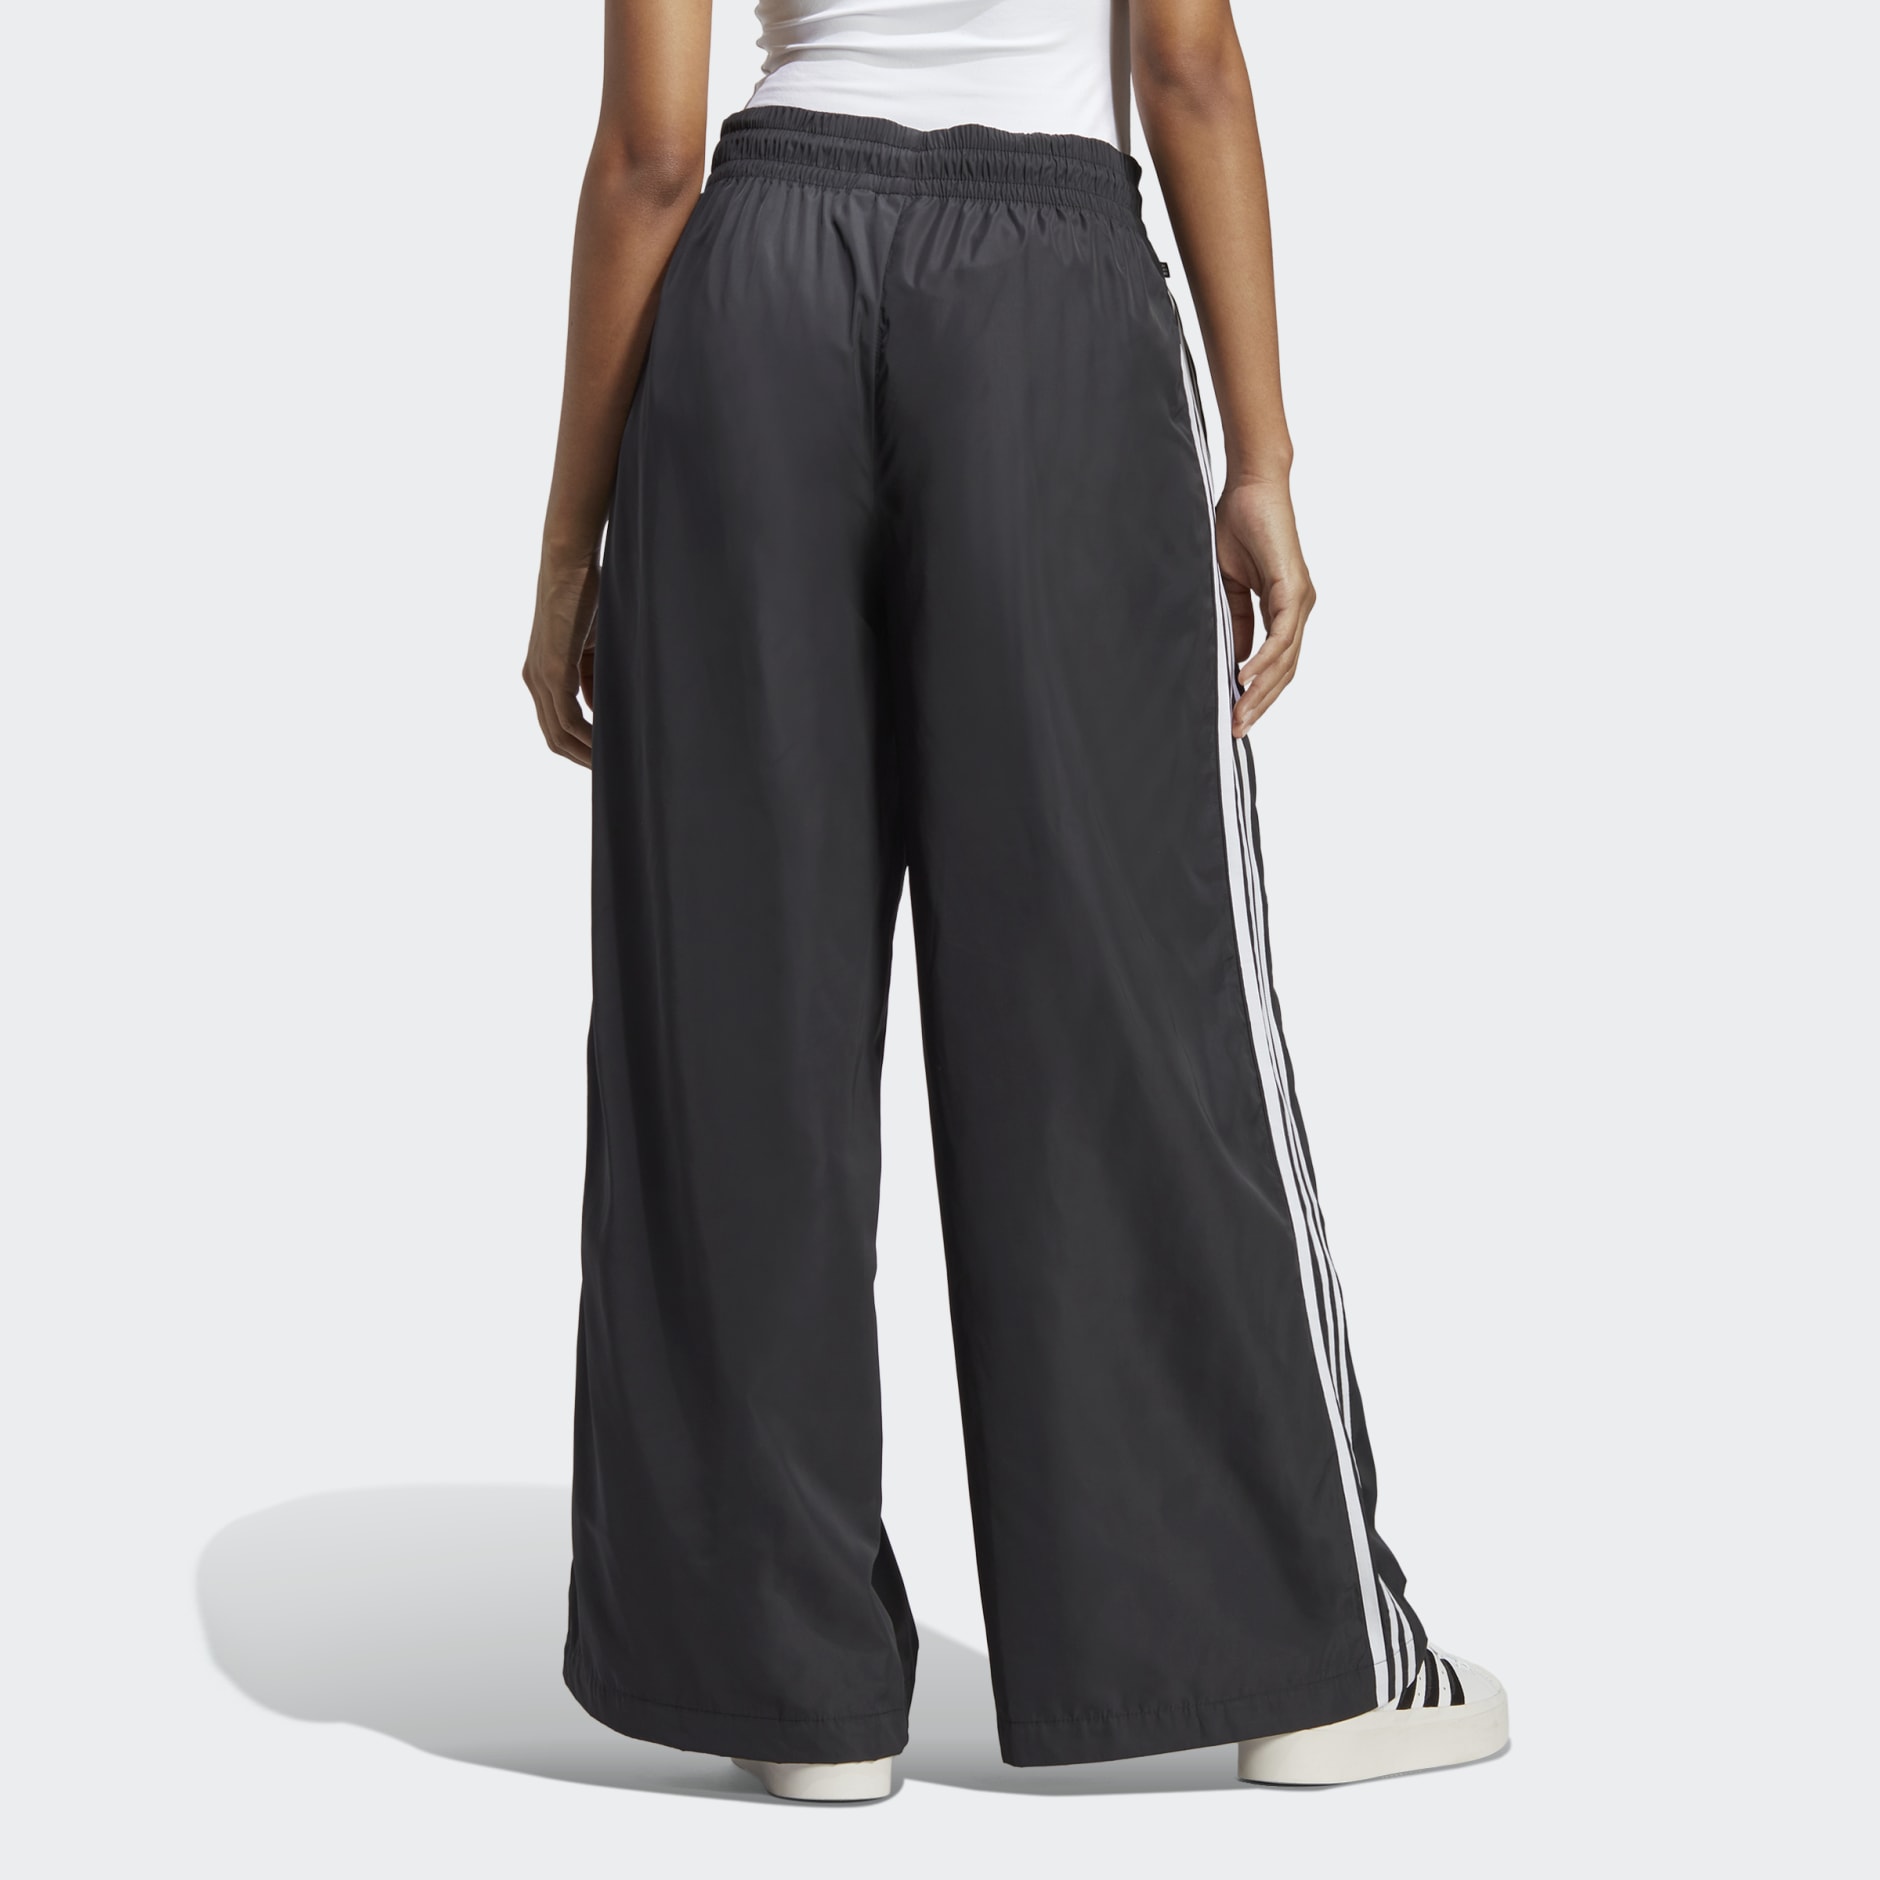 Clothing - Oversized Track Pants - Black | adidas South Africa